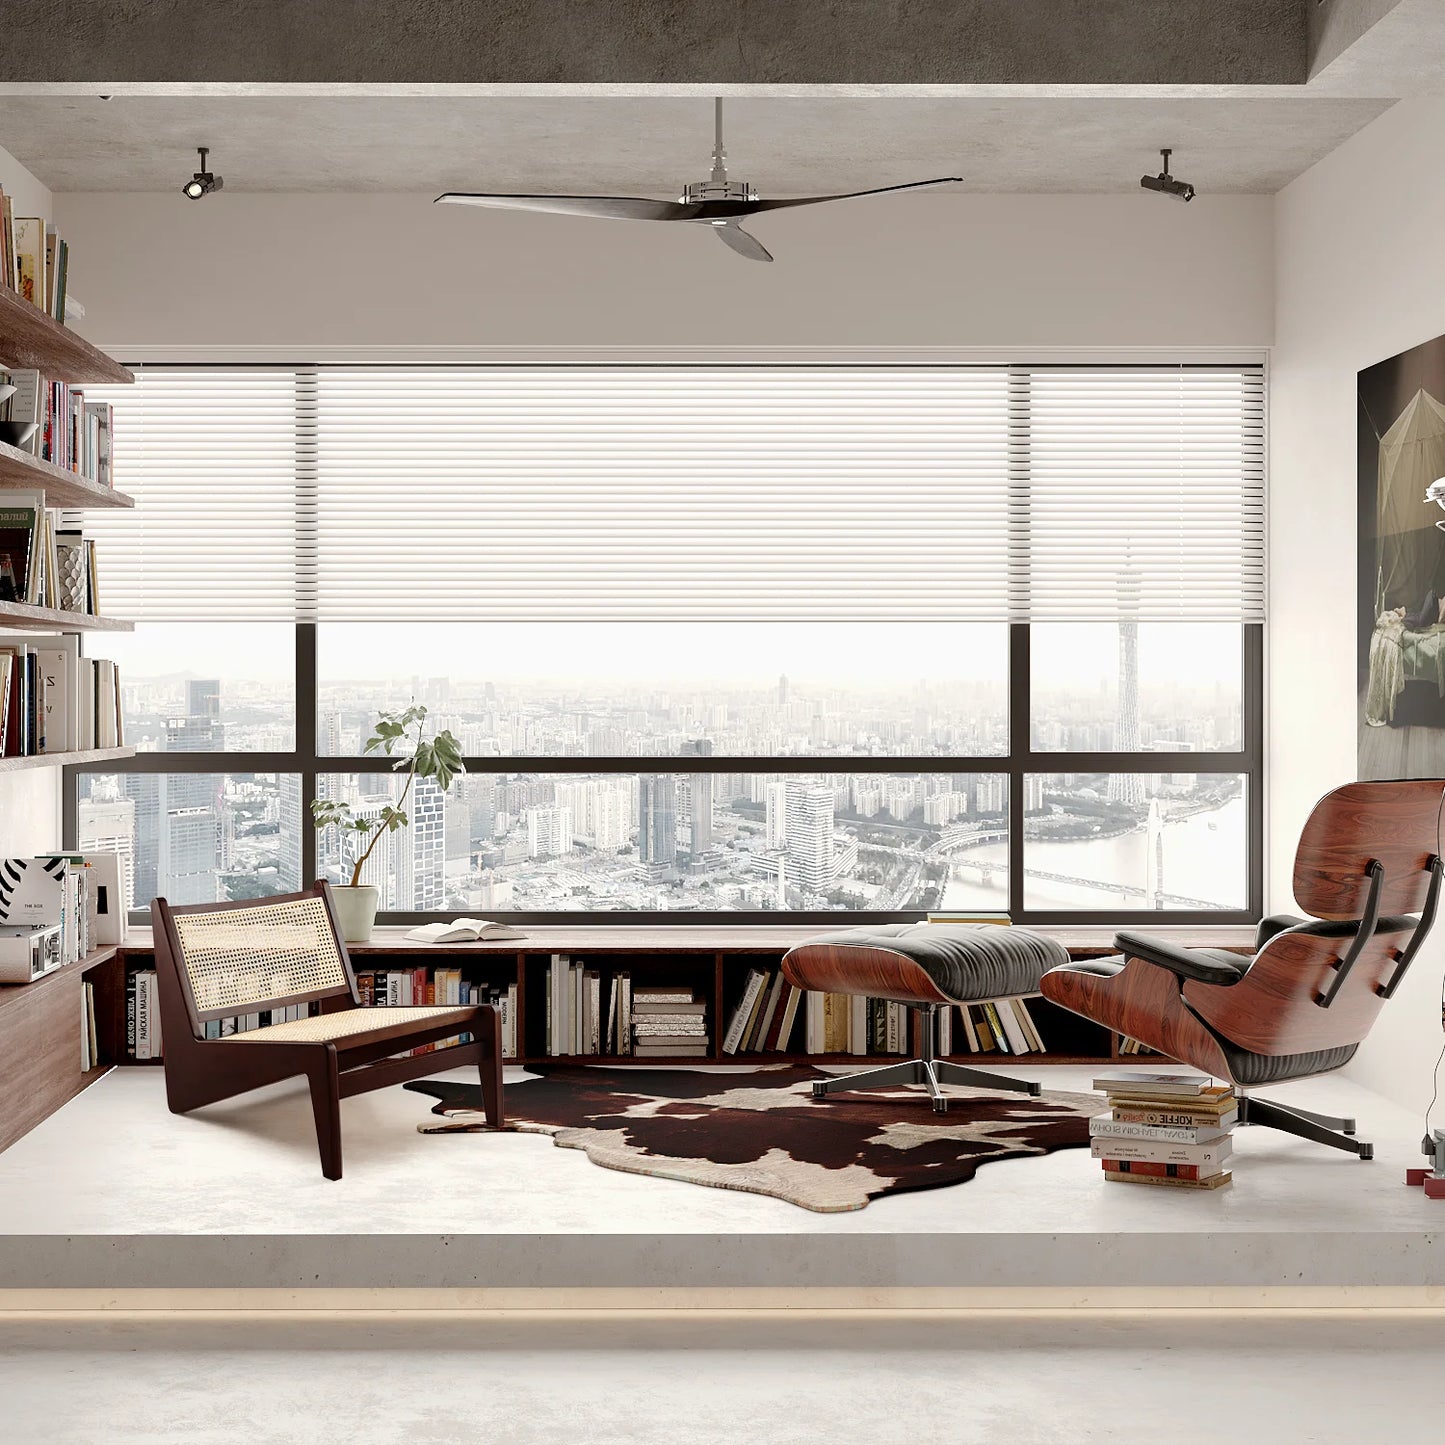 Arthia Designs - Chandigarh Kangaroo Wood Rattan Chair - Review